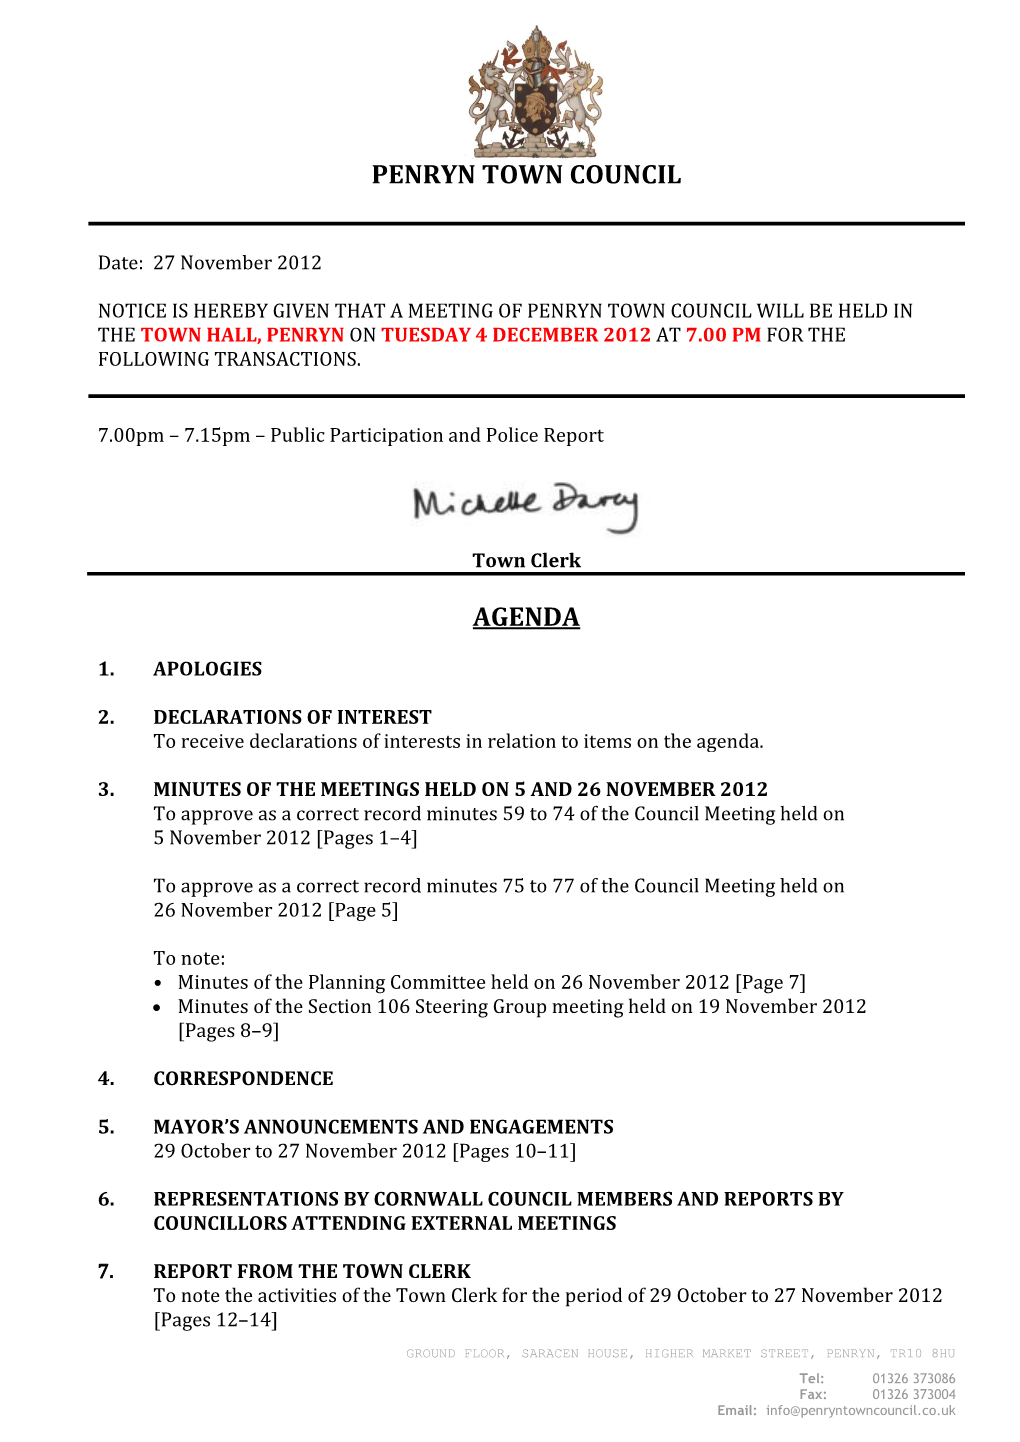 Penryn Town Council Council 4 December 2012